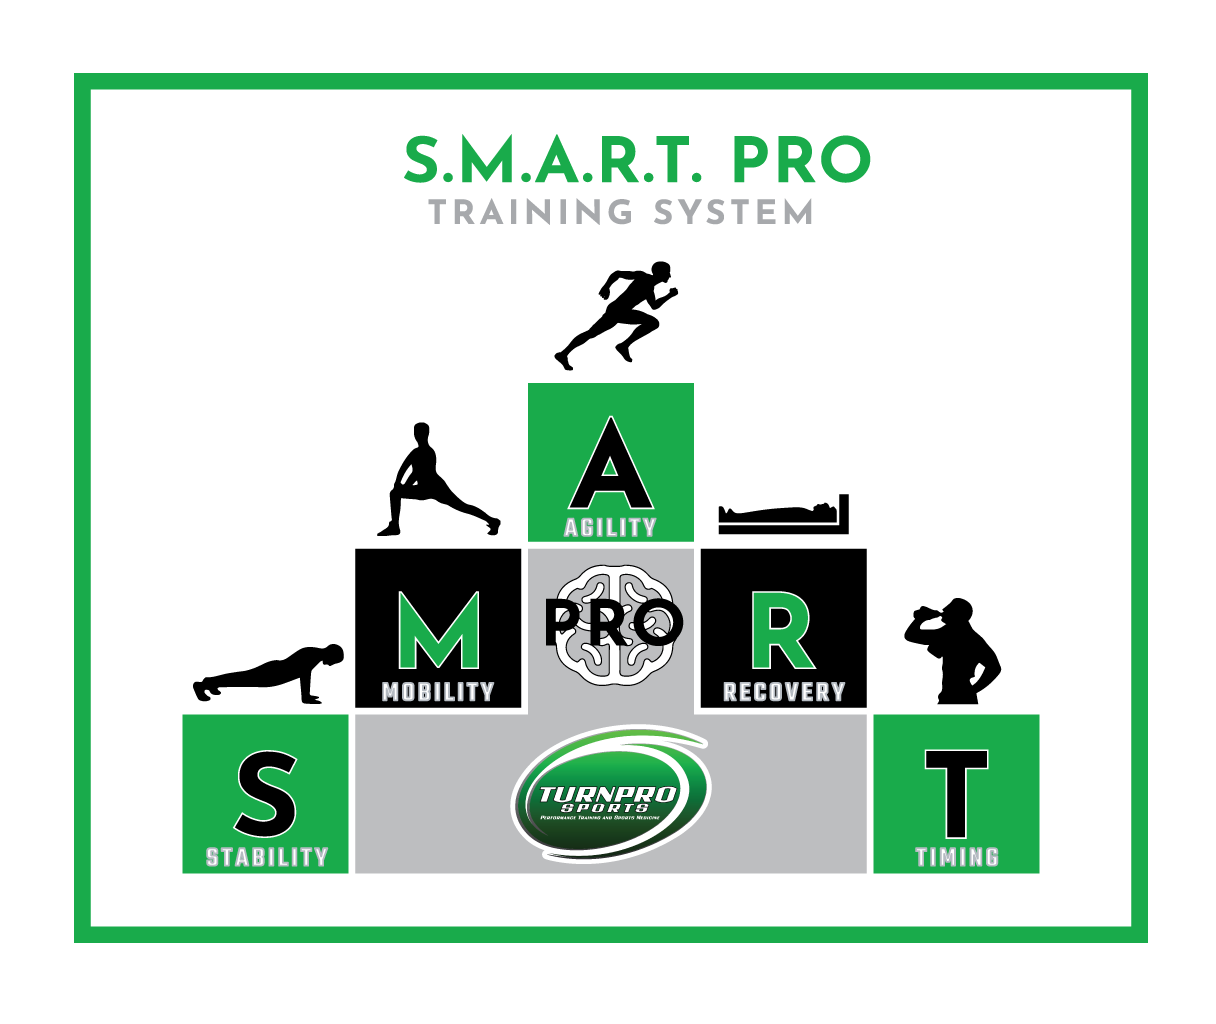 SMART Pro Training System